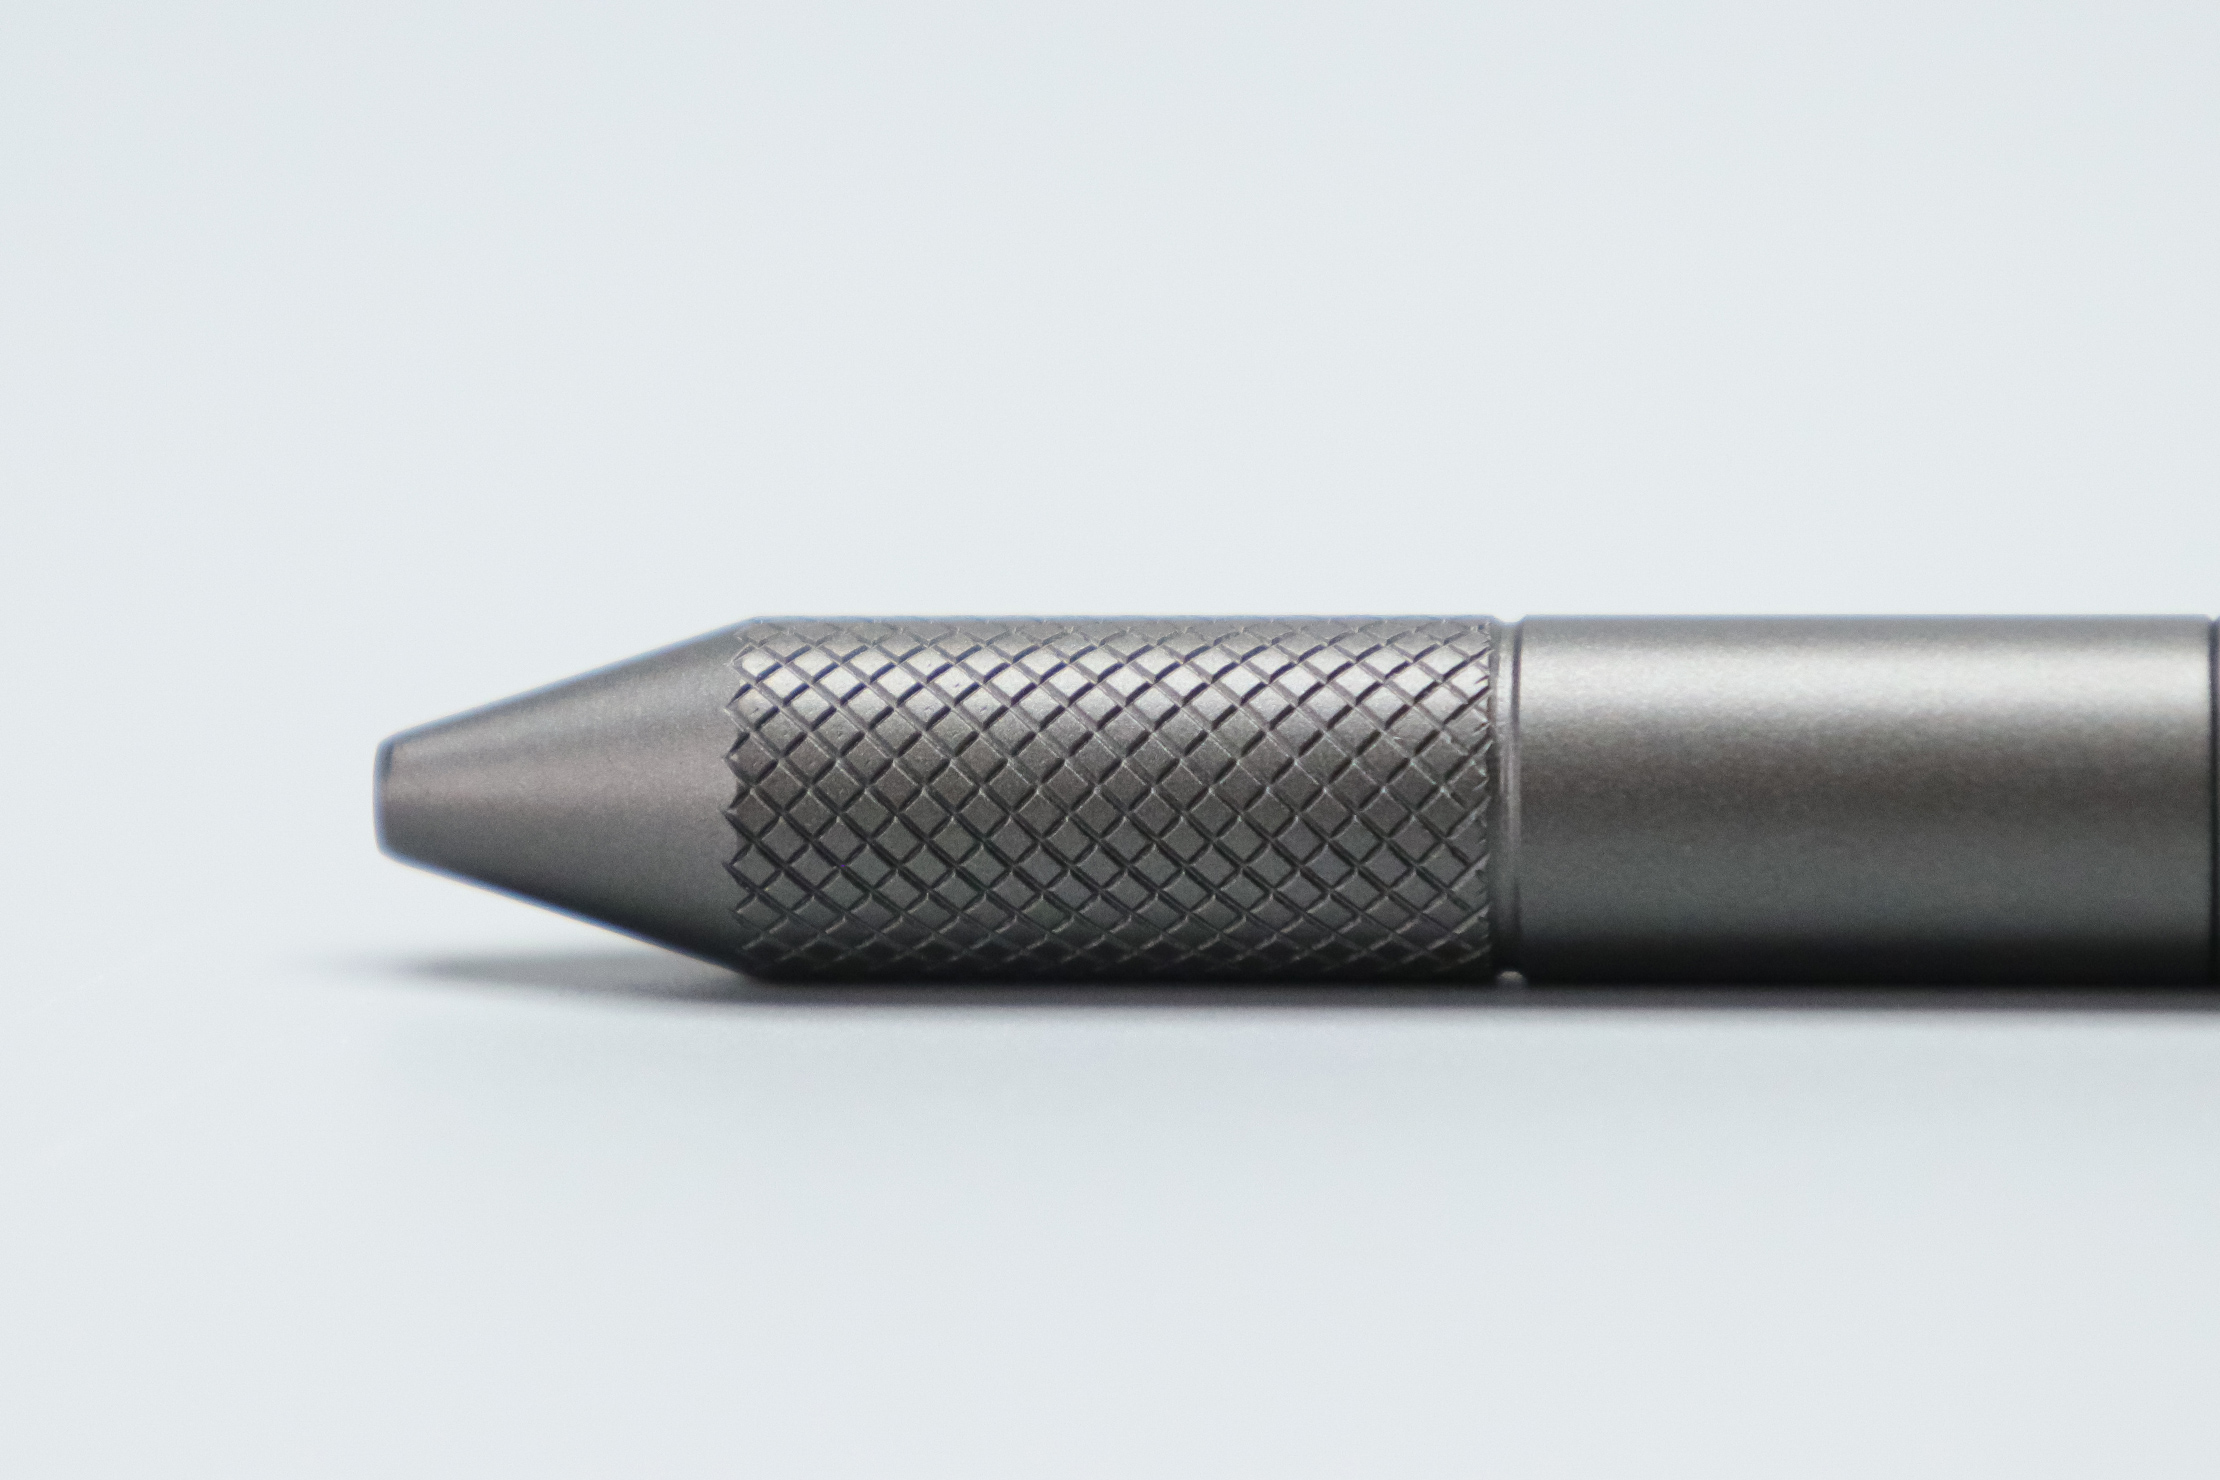 The Ridge Bolt Action Pen textured grip